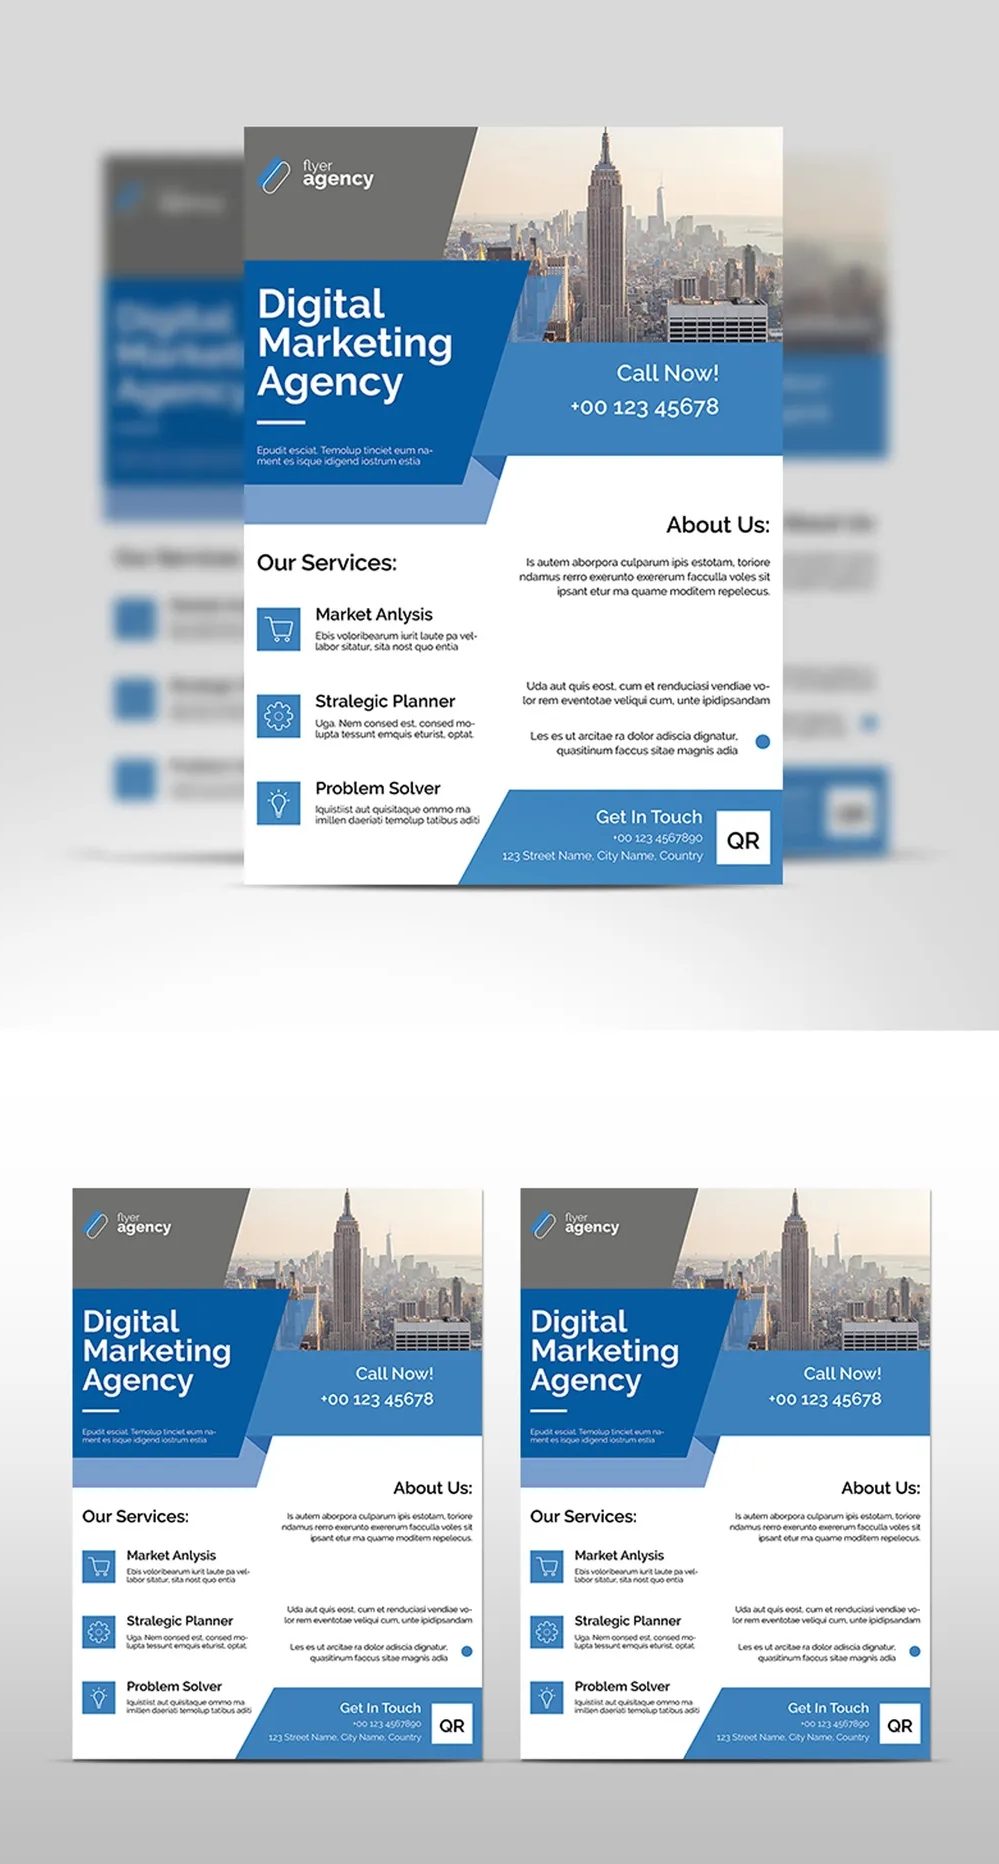 Adobestock - Digital Business Flyer Layout 715623247